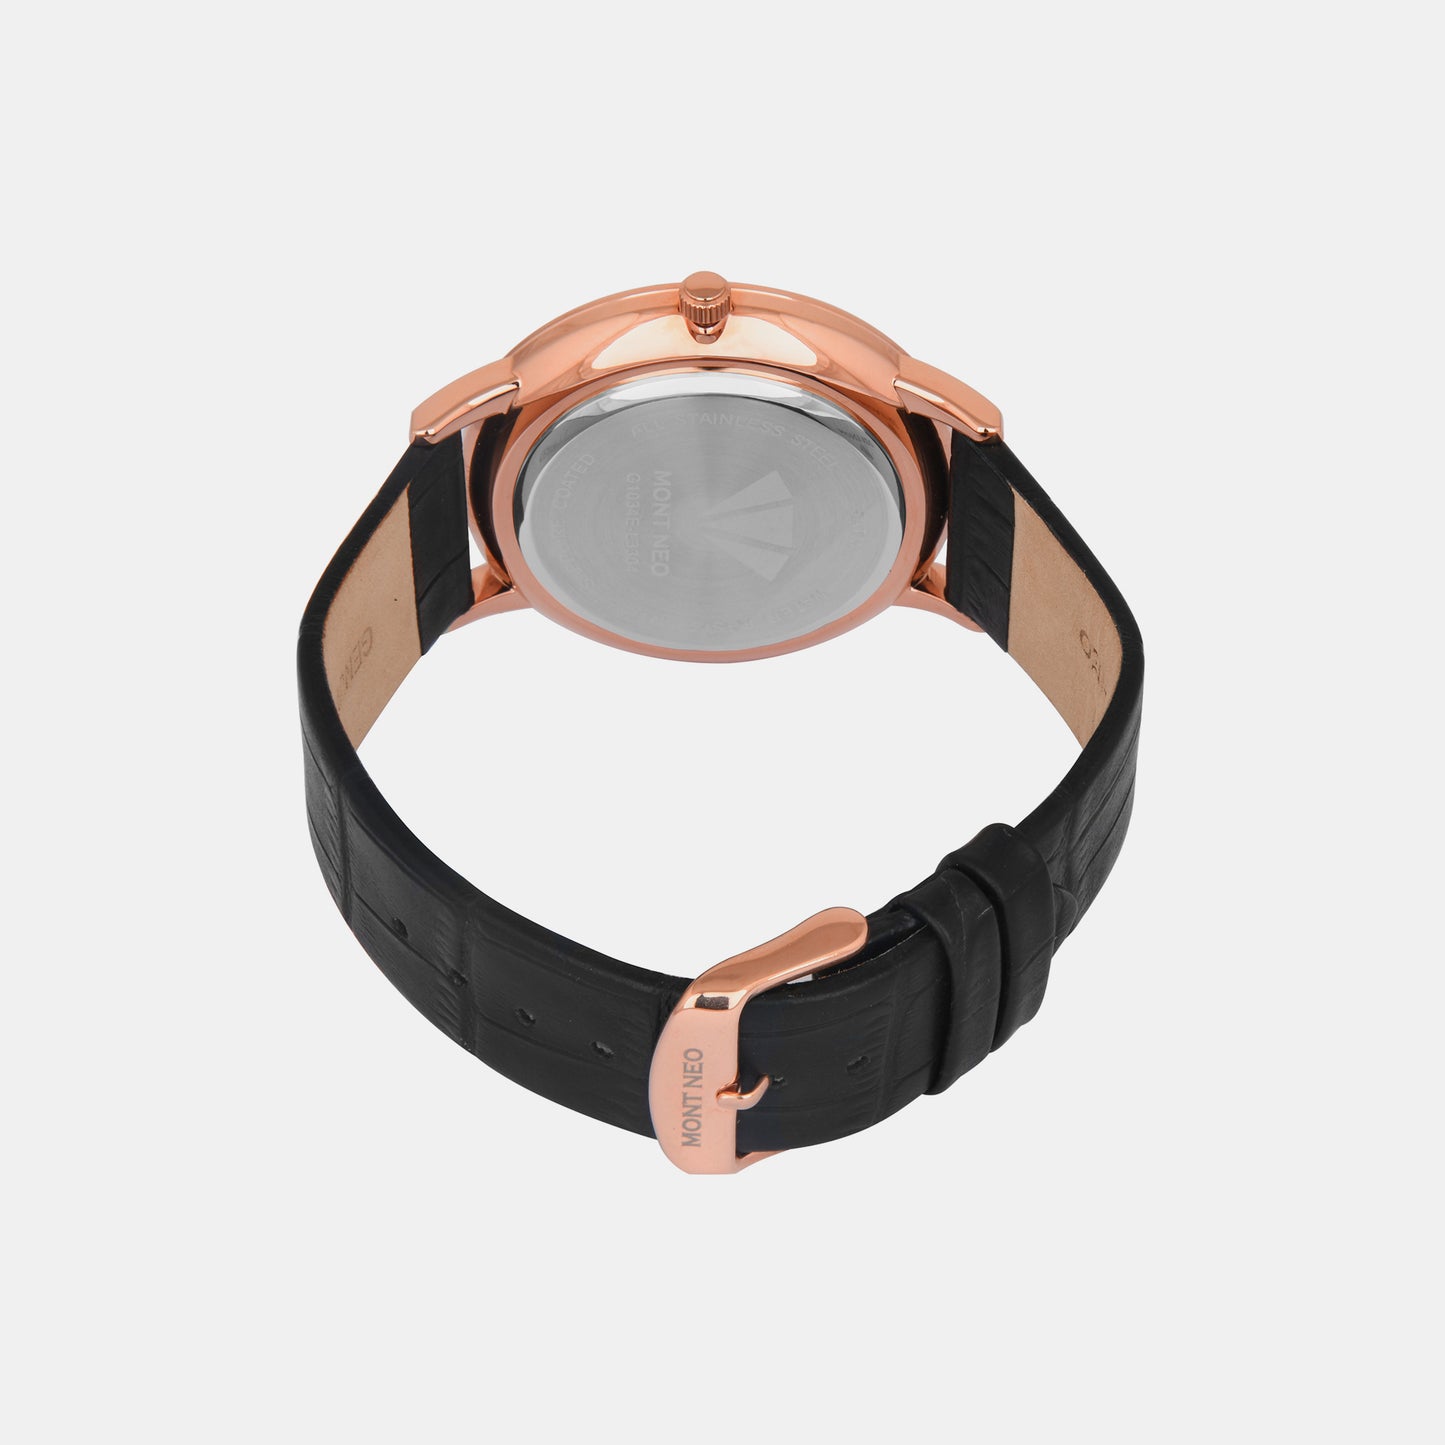 Male Black Analog Leather Watch G1034E-L3304